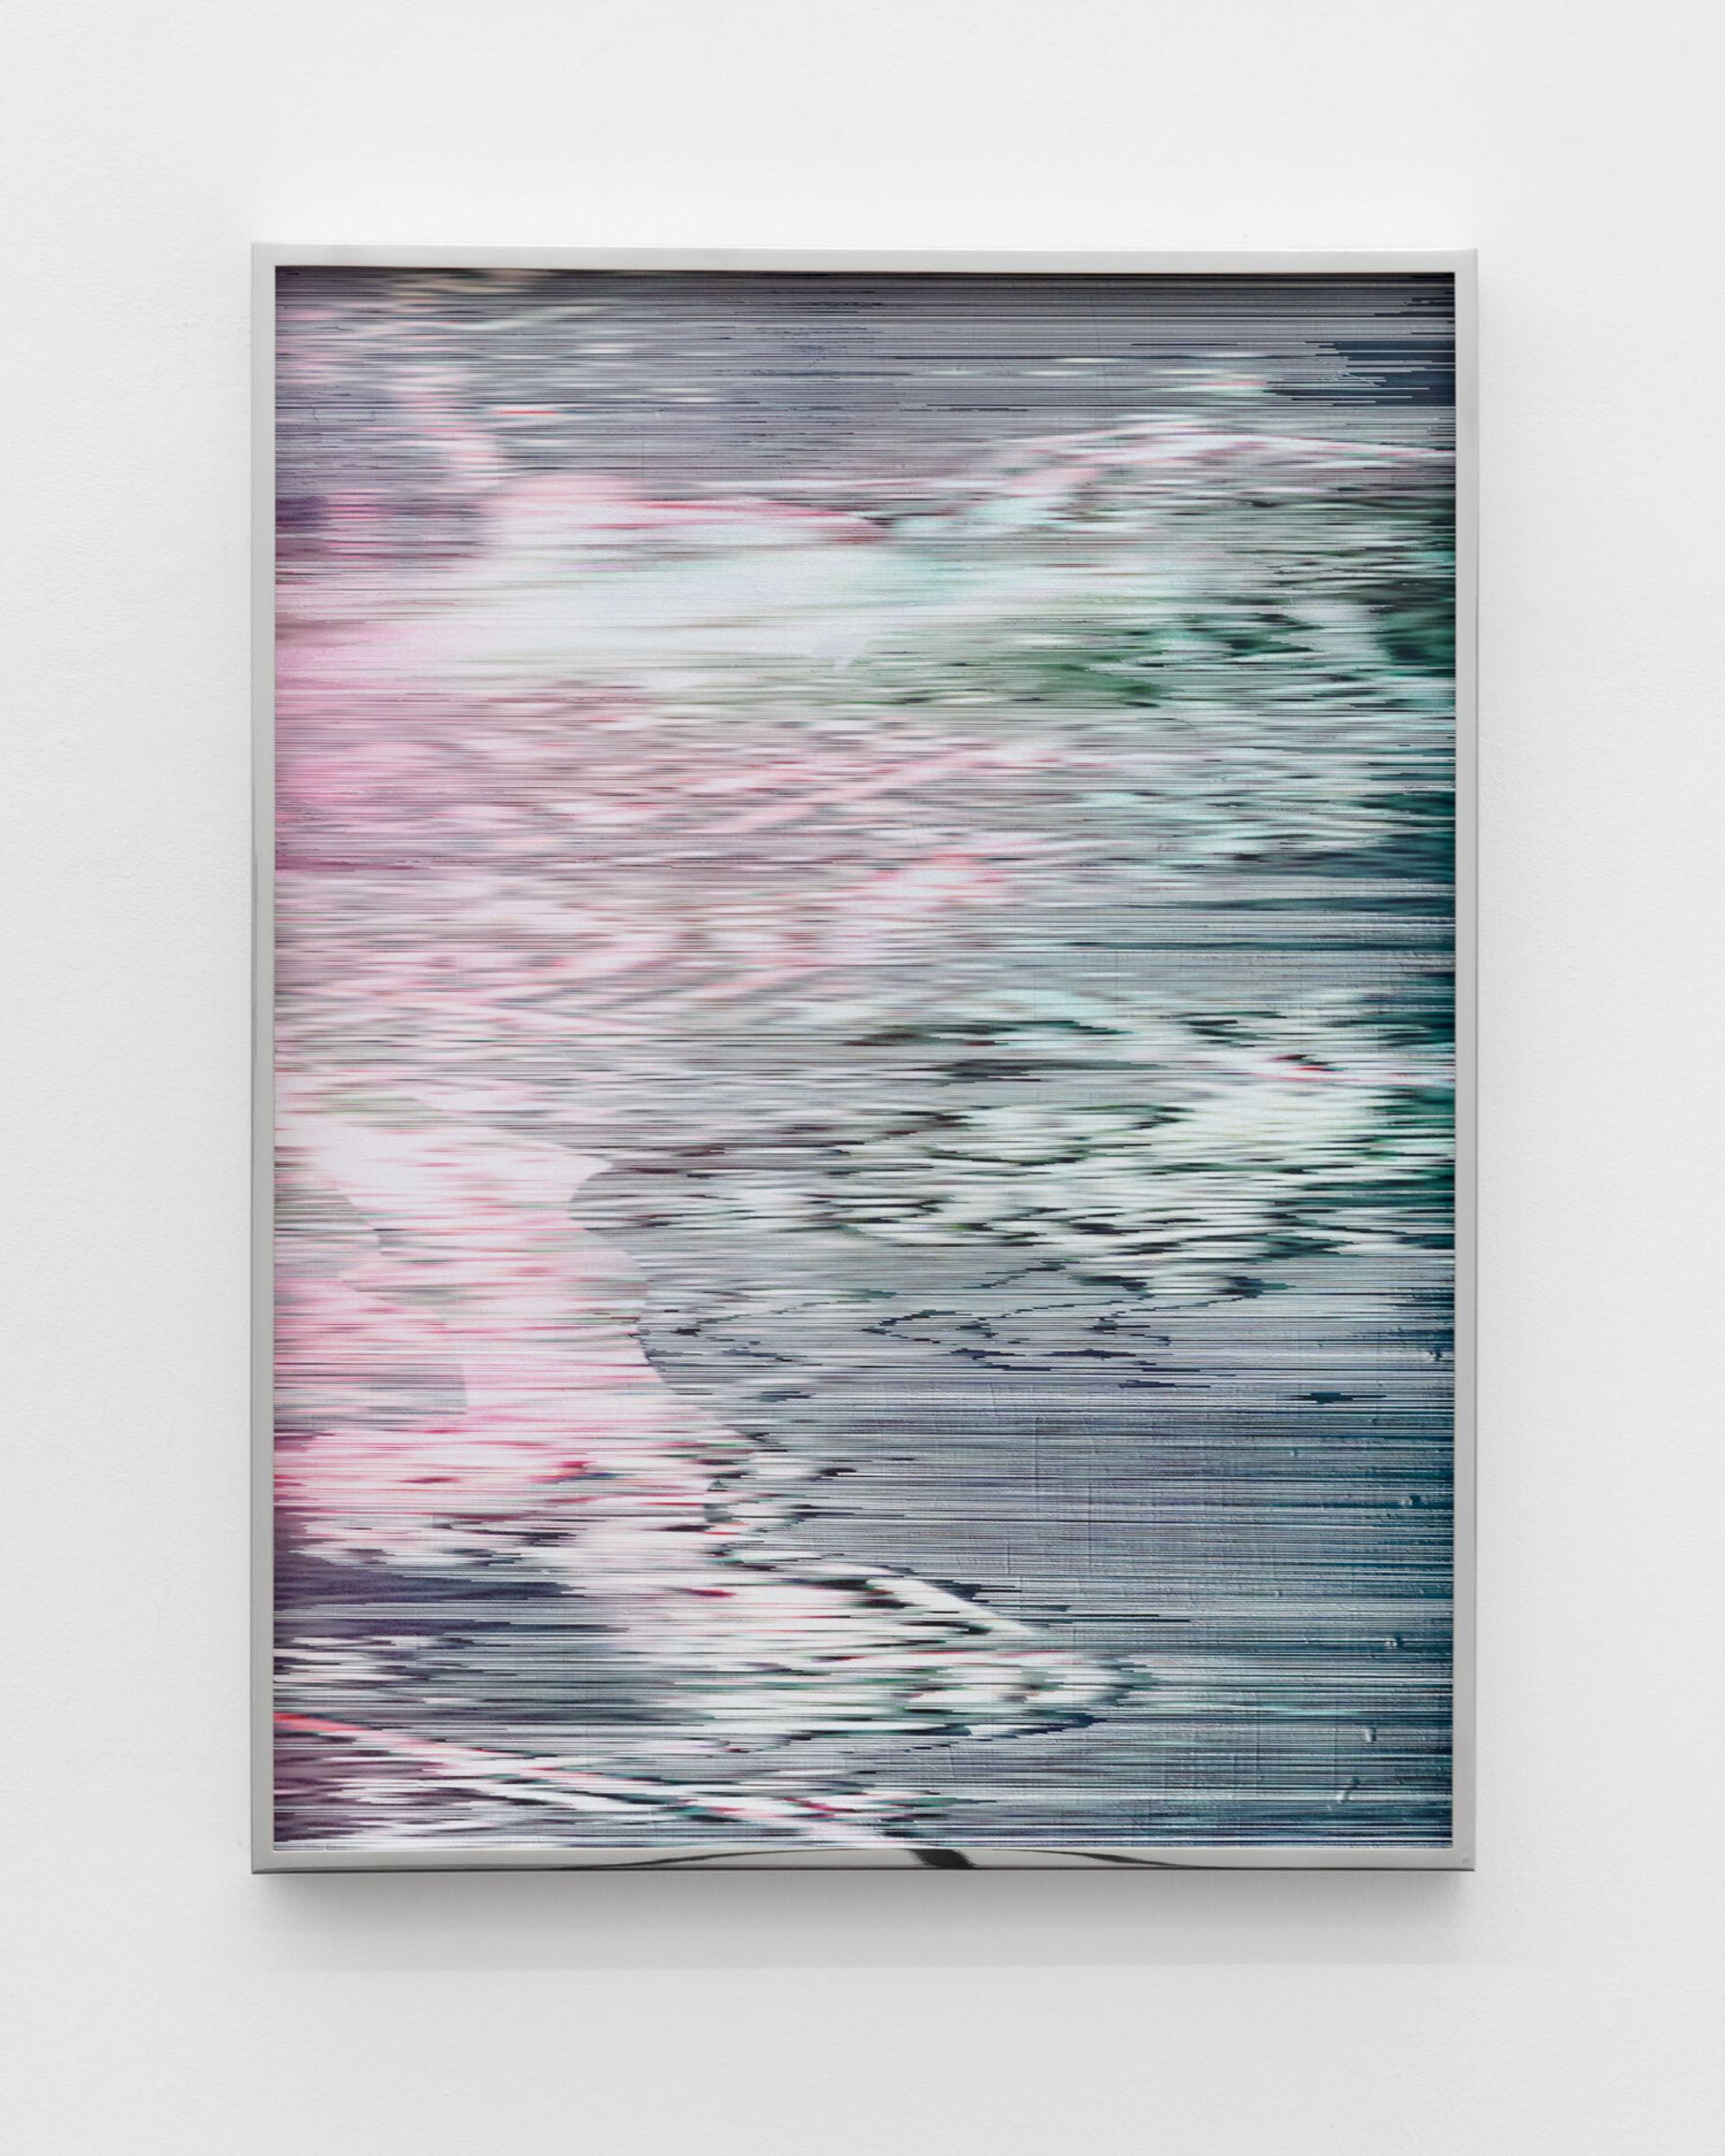 Anna Vogel, Electric Mountains V, 2019 
lacquer on pigment print, scratched, framed in polished chrome, artglass, 
60 × 45 cm
unique

Photo: Sebastian Kissel